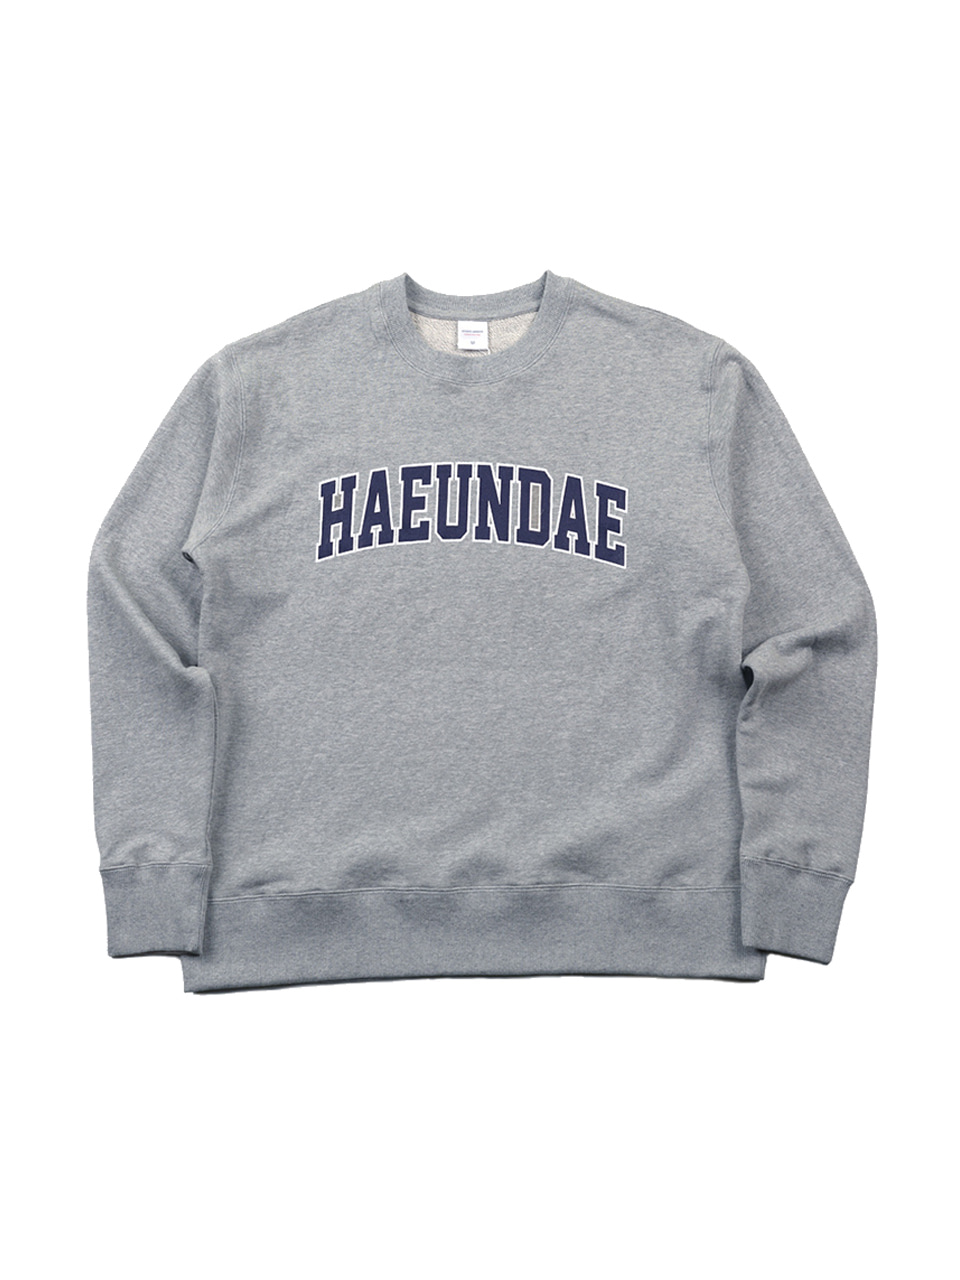 Haeundae Sweat shirts gray